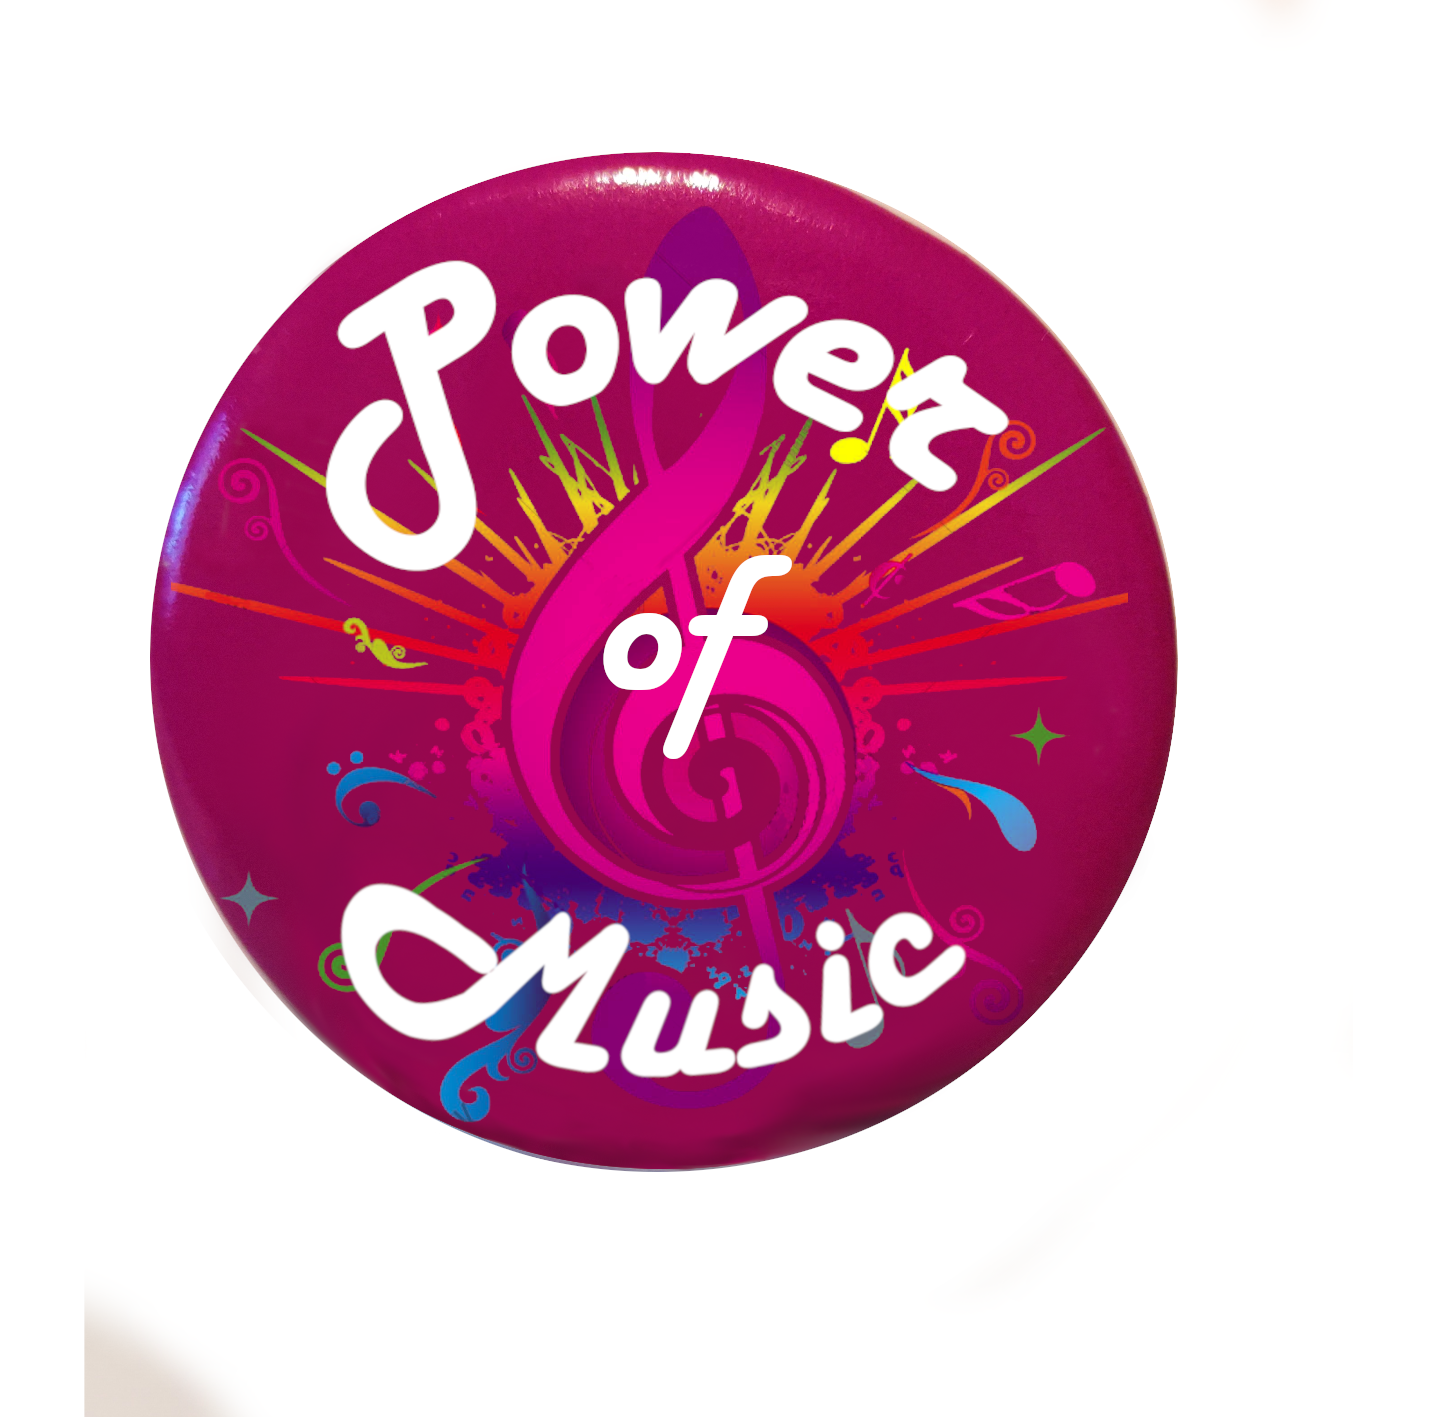 Power Of Music